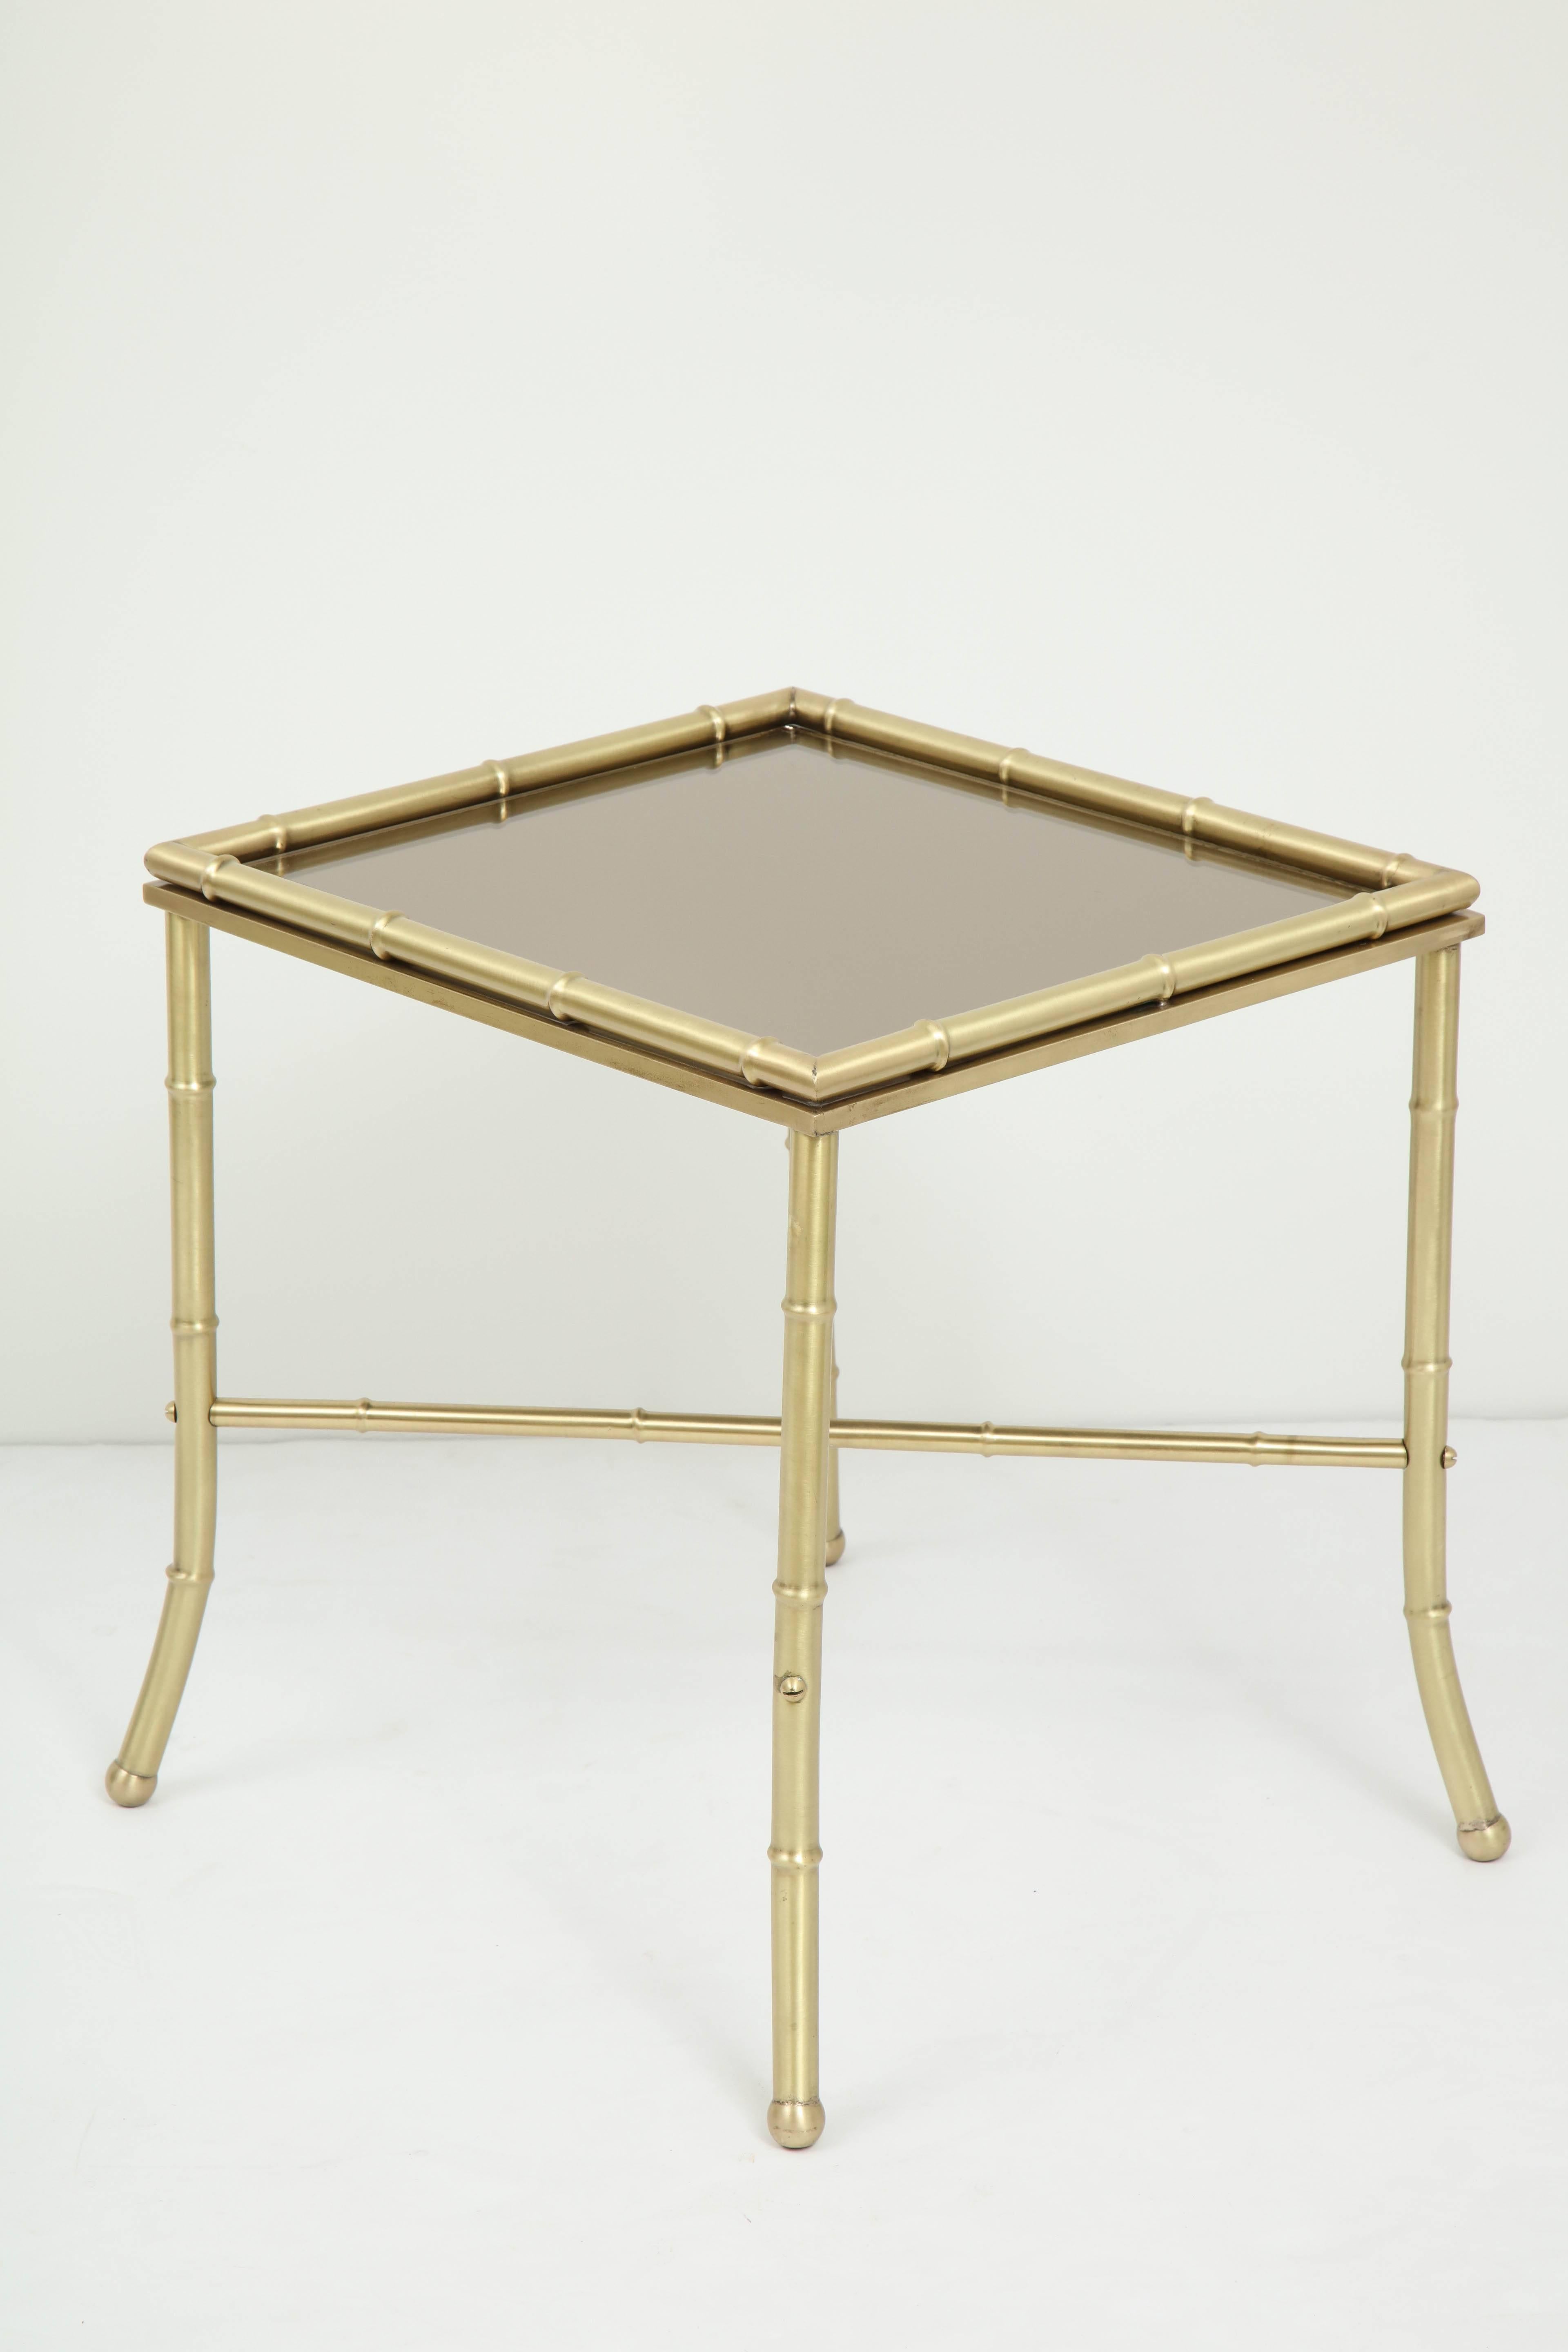 20th Century Maison Jansen Attributed Brass Side Tables